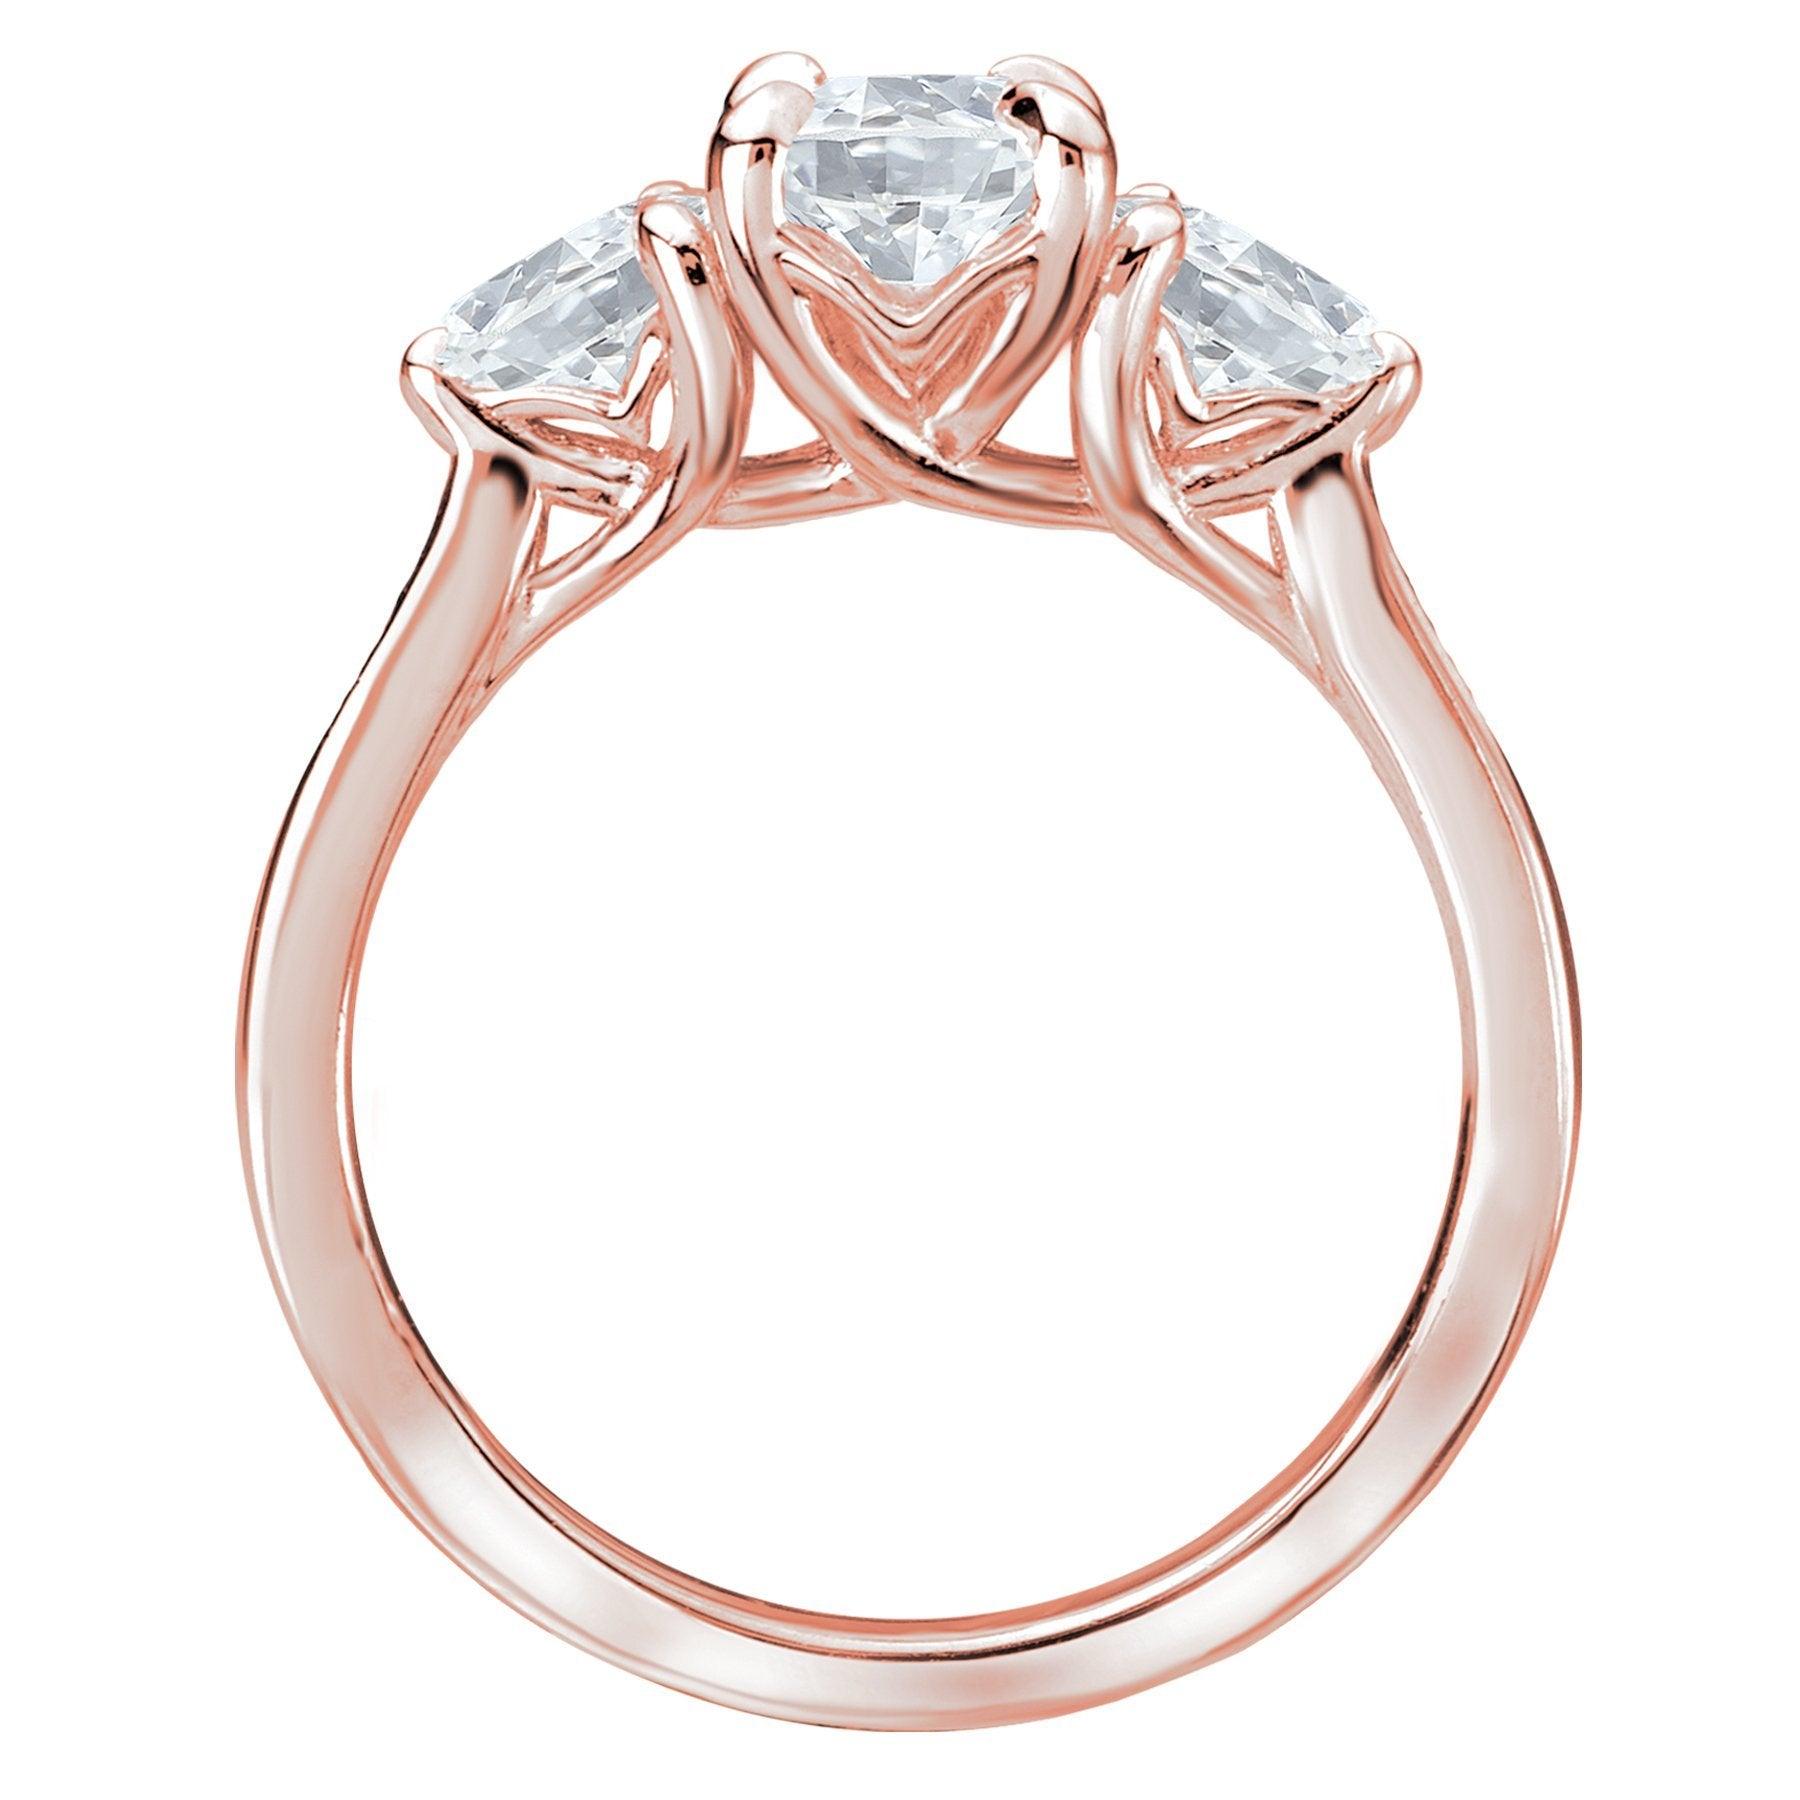 BW JAMES Engagement Rings " The Long Island" Three Stone Semi-Mount Diamond Ring